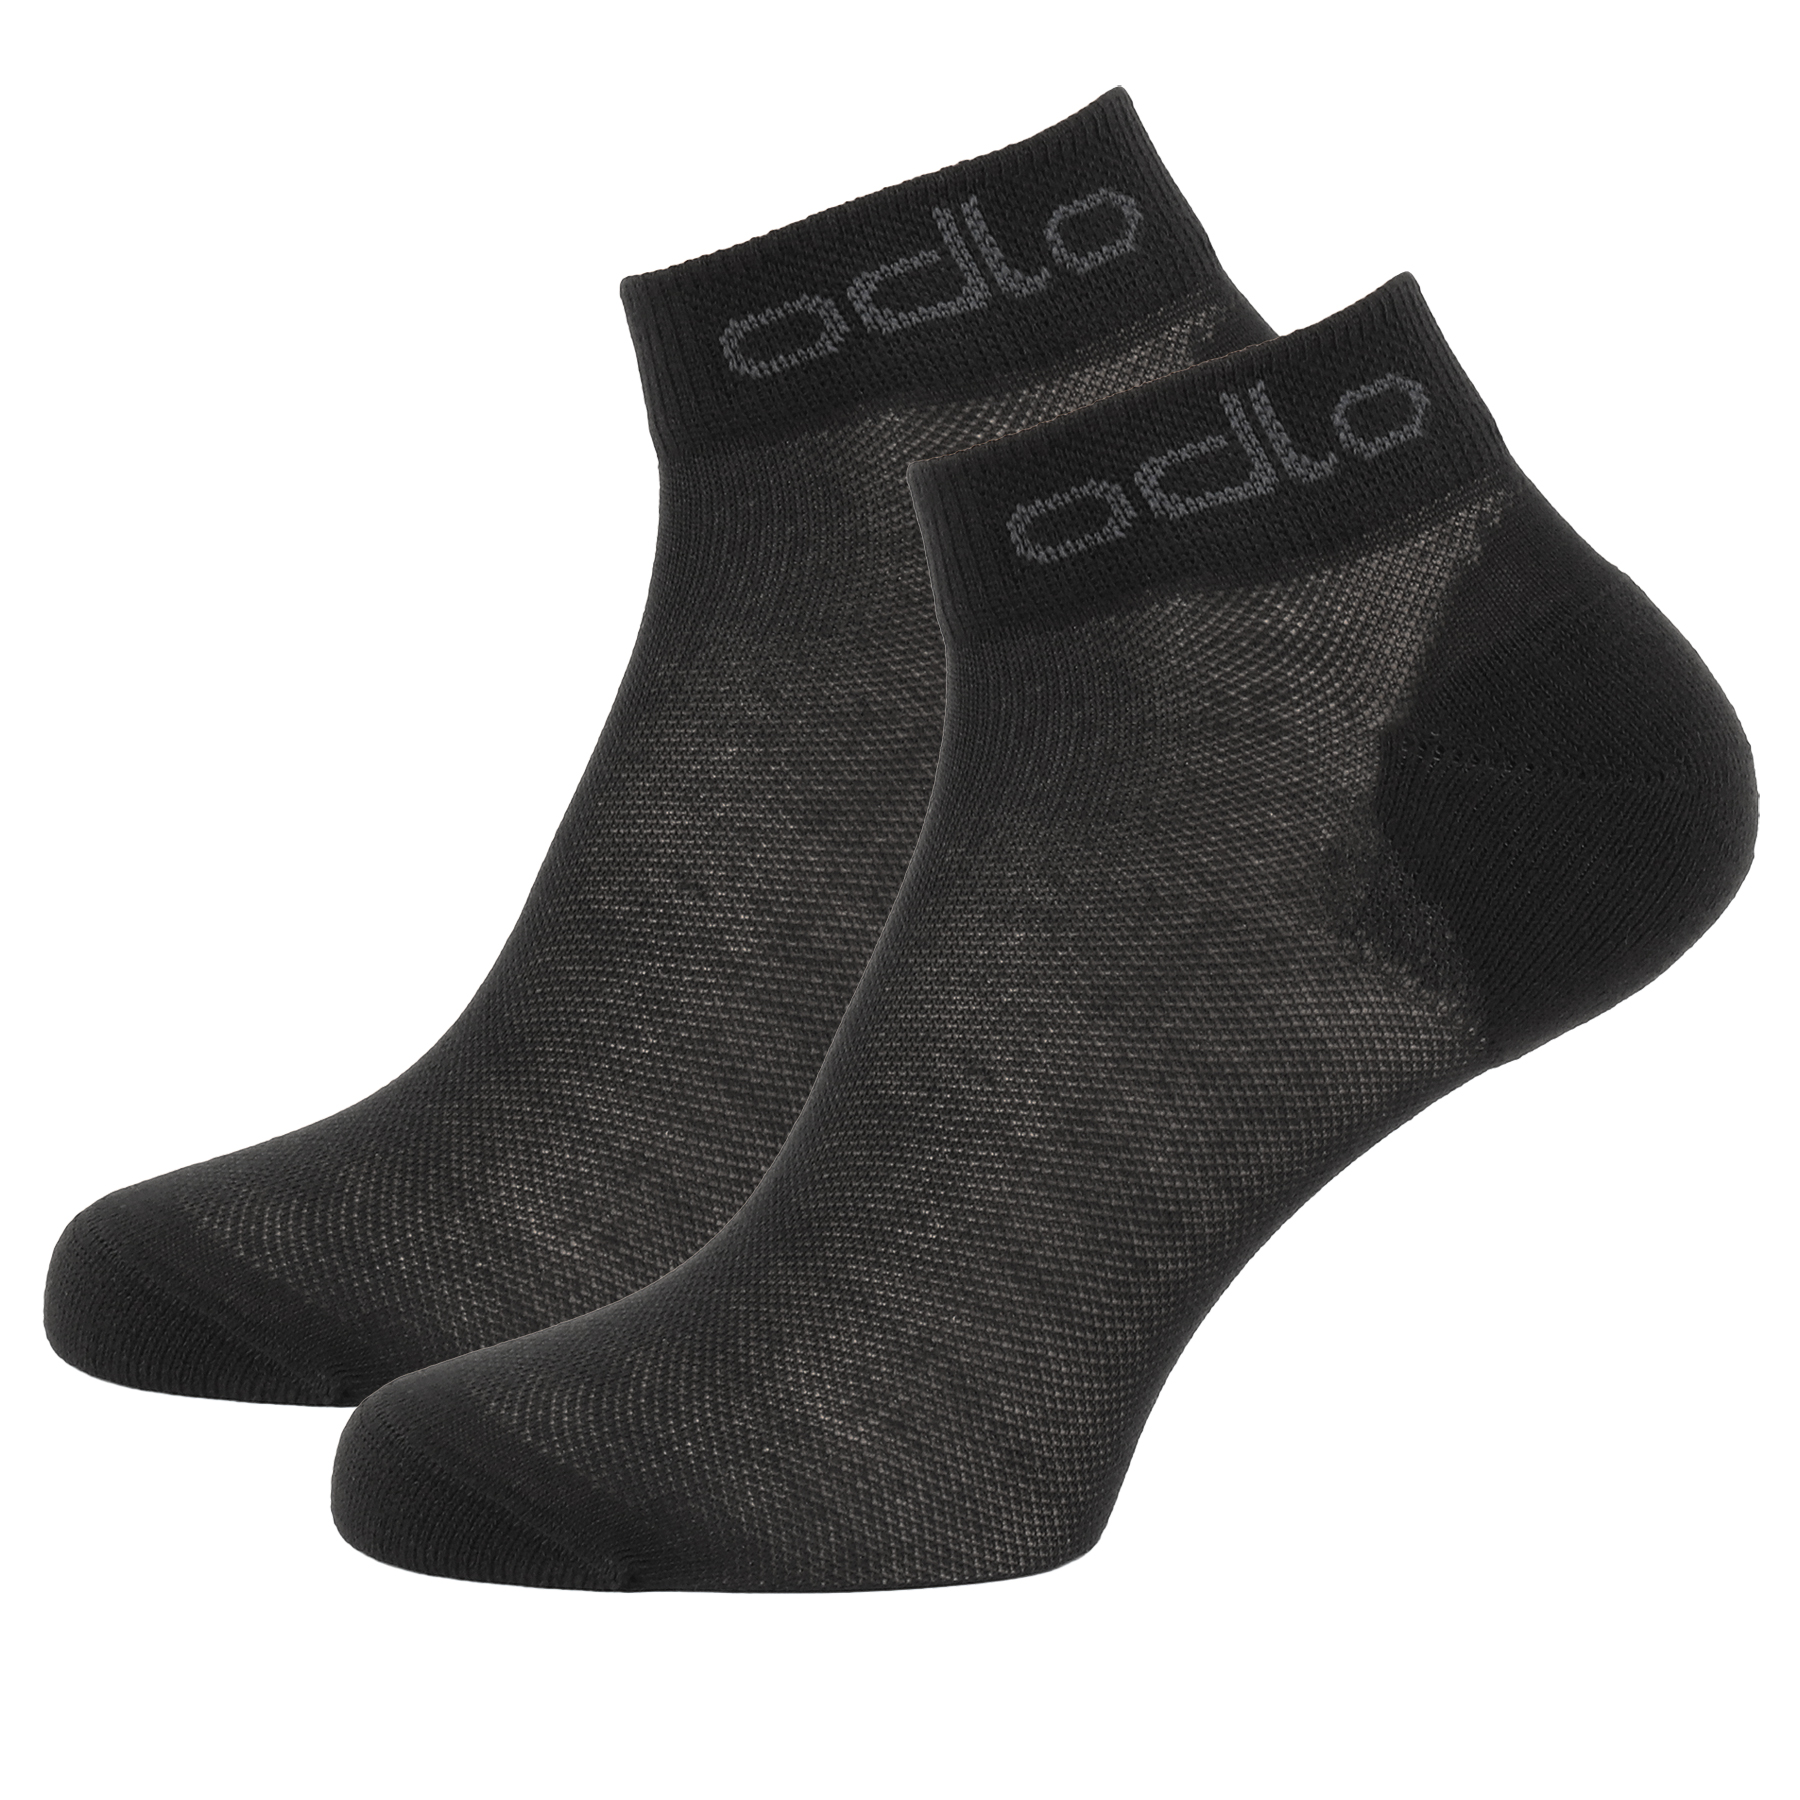 Bild von Odlo ACTIVE LOW Sneaker-Socken im Doppelpack - schwarz